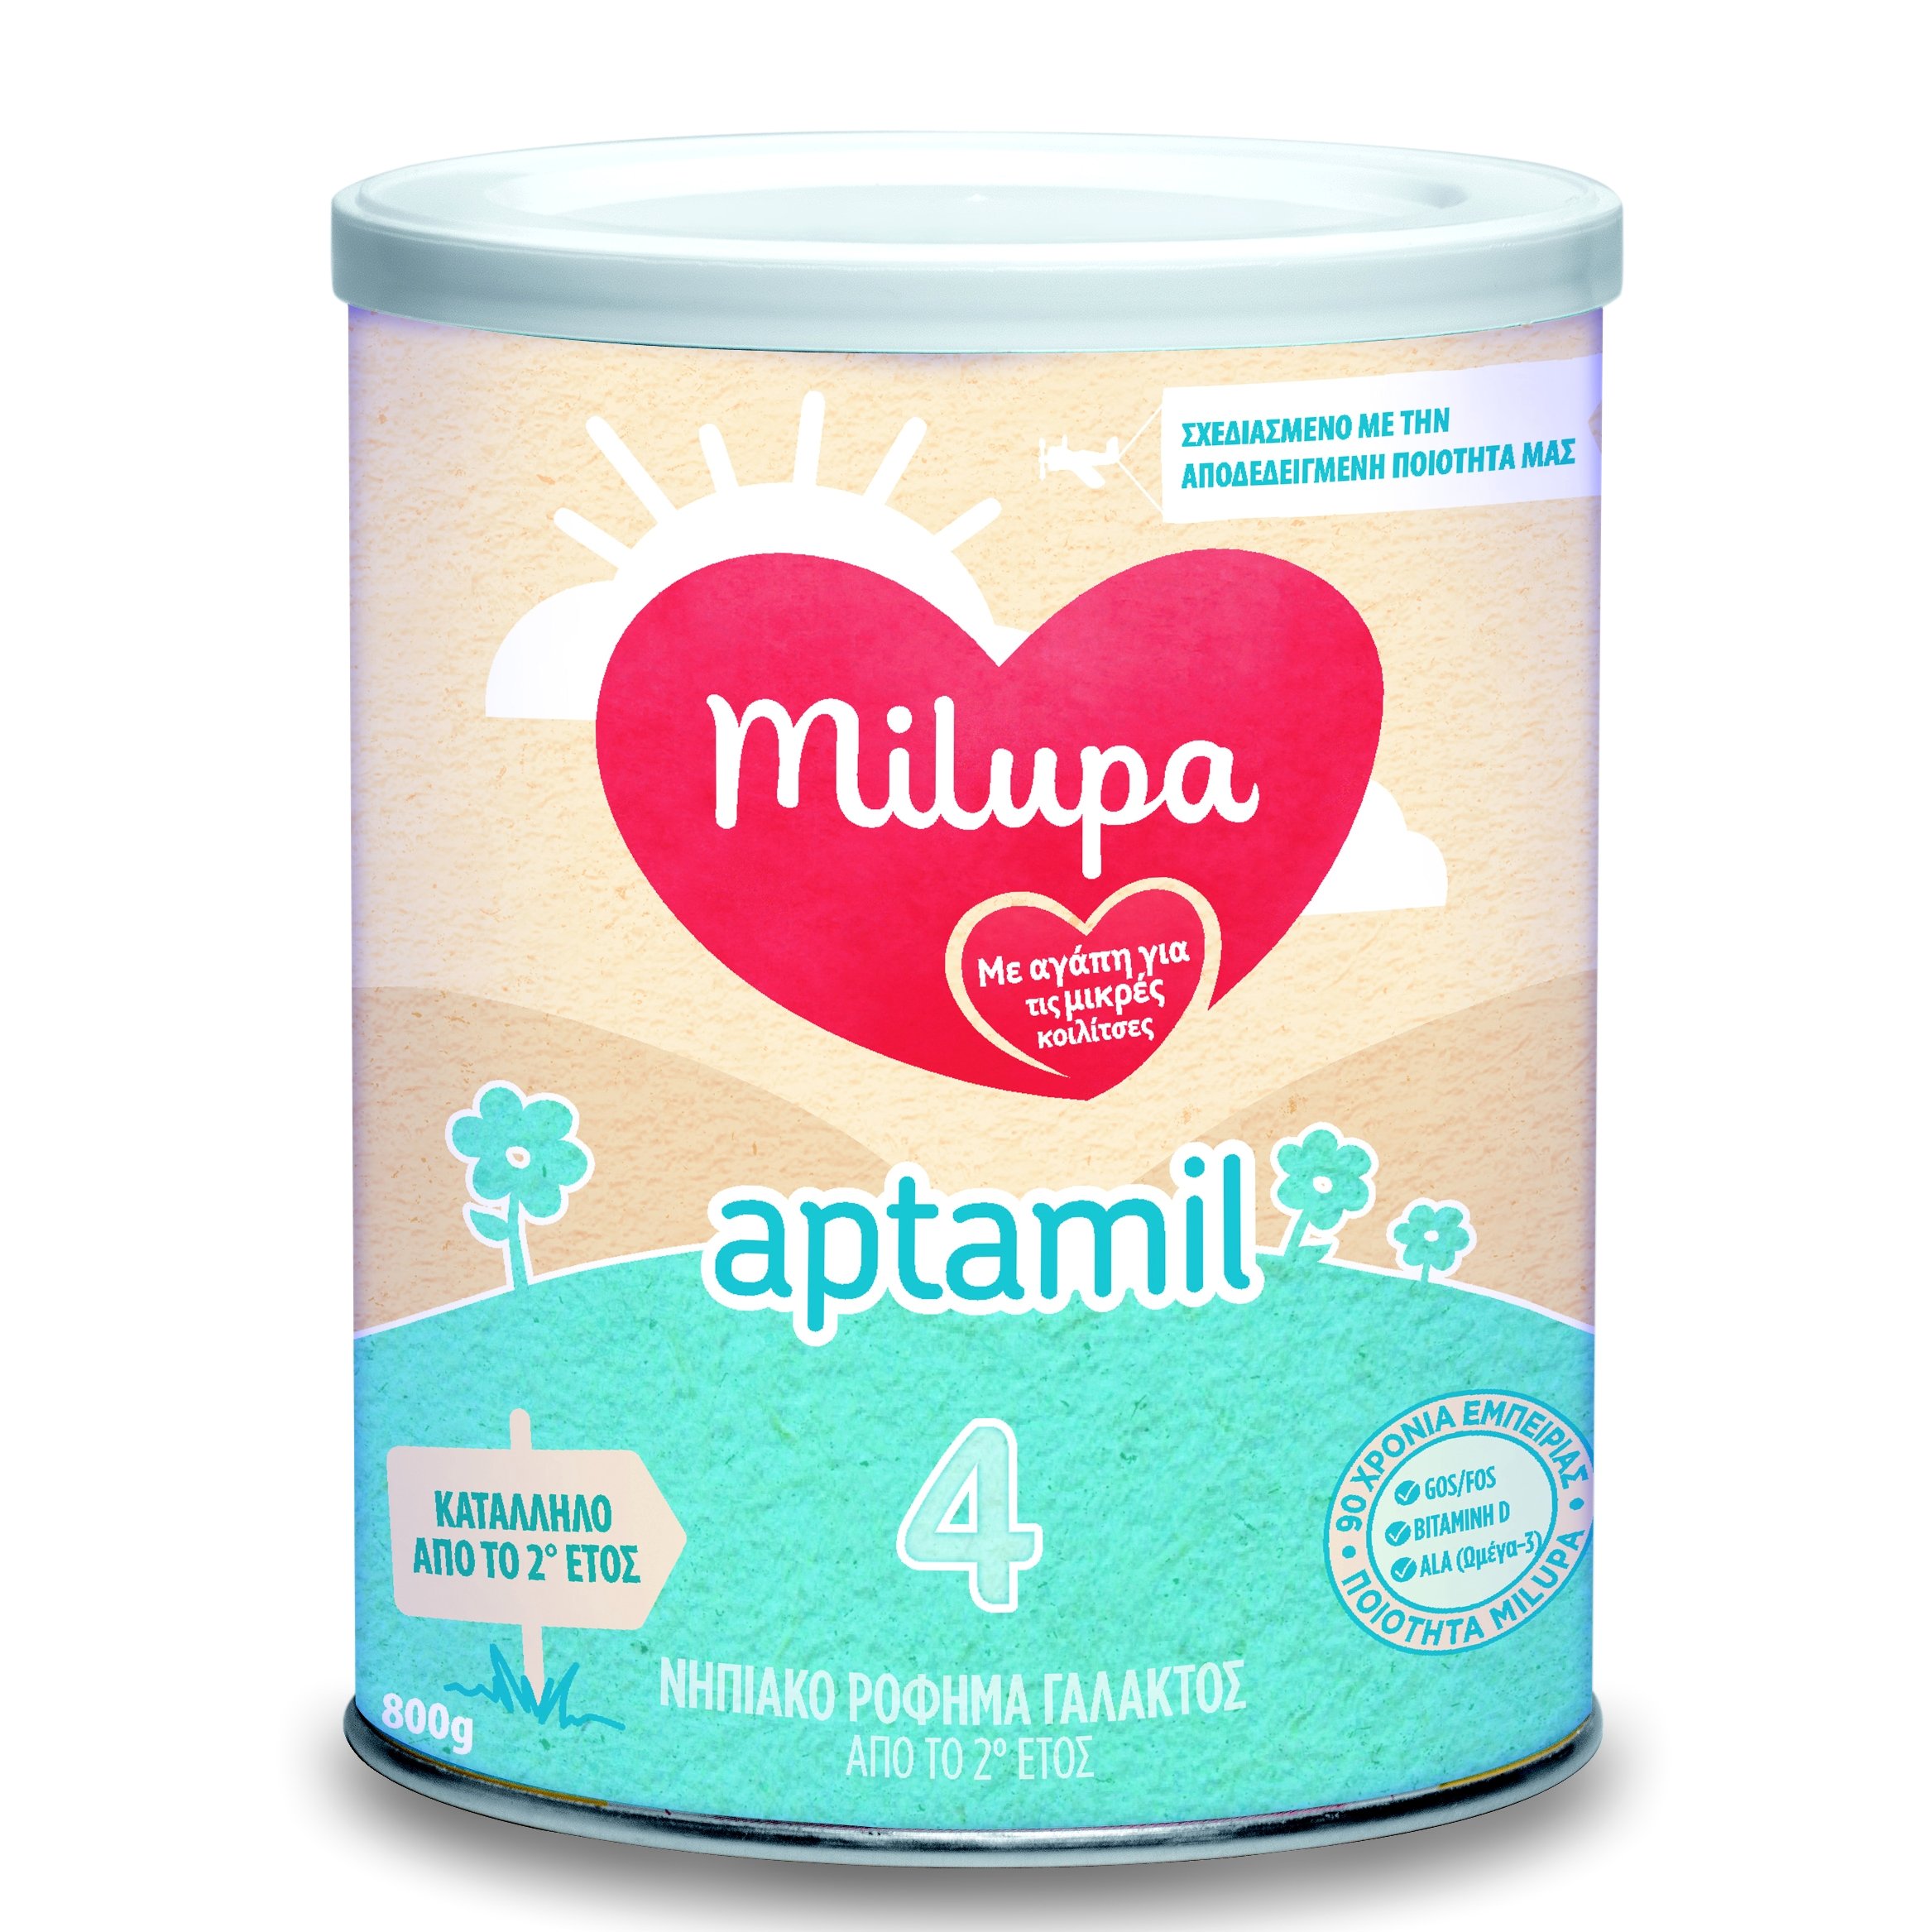 Milupa Aptamil 4 Νηπιακό Ρόφημα Γάλακτος από το 2ο Έτος 800gr